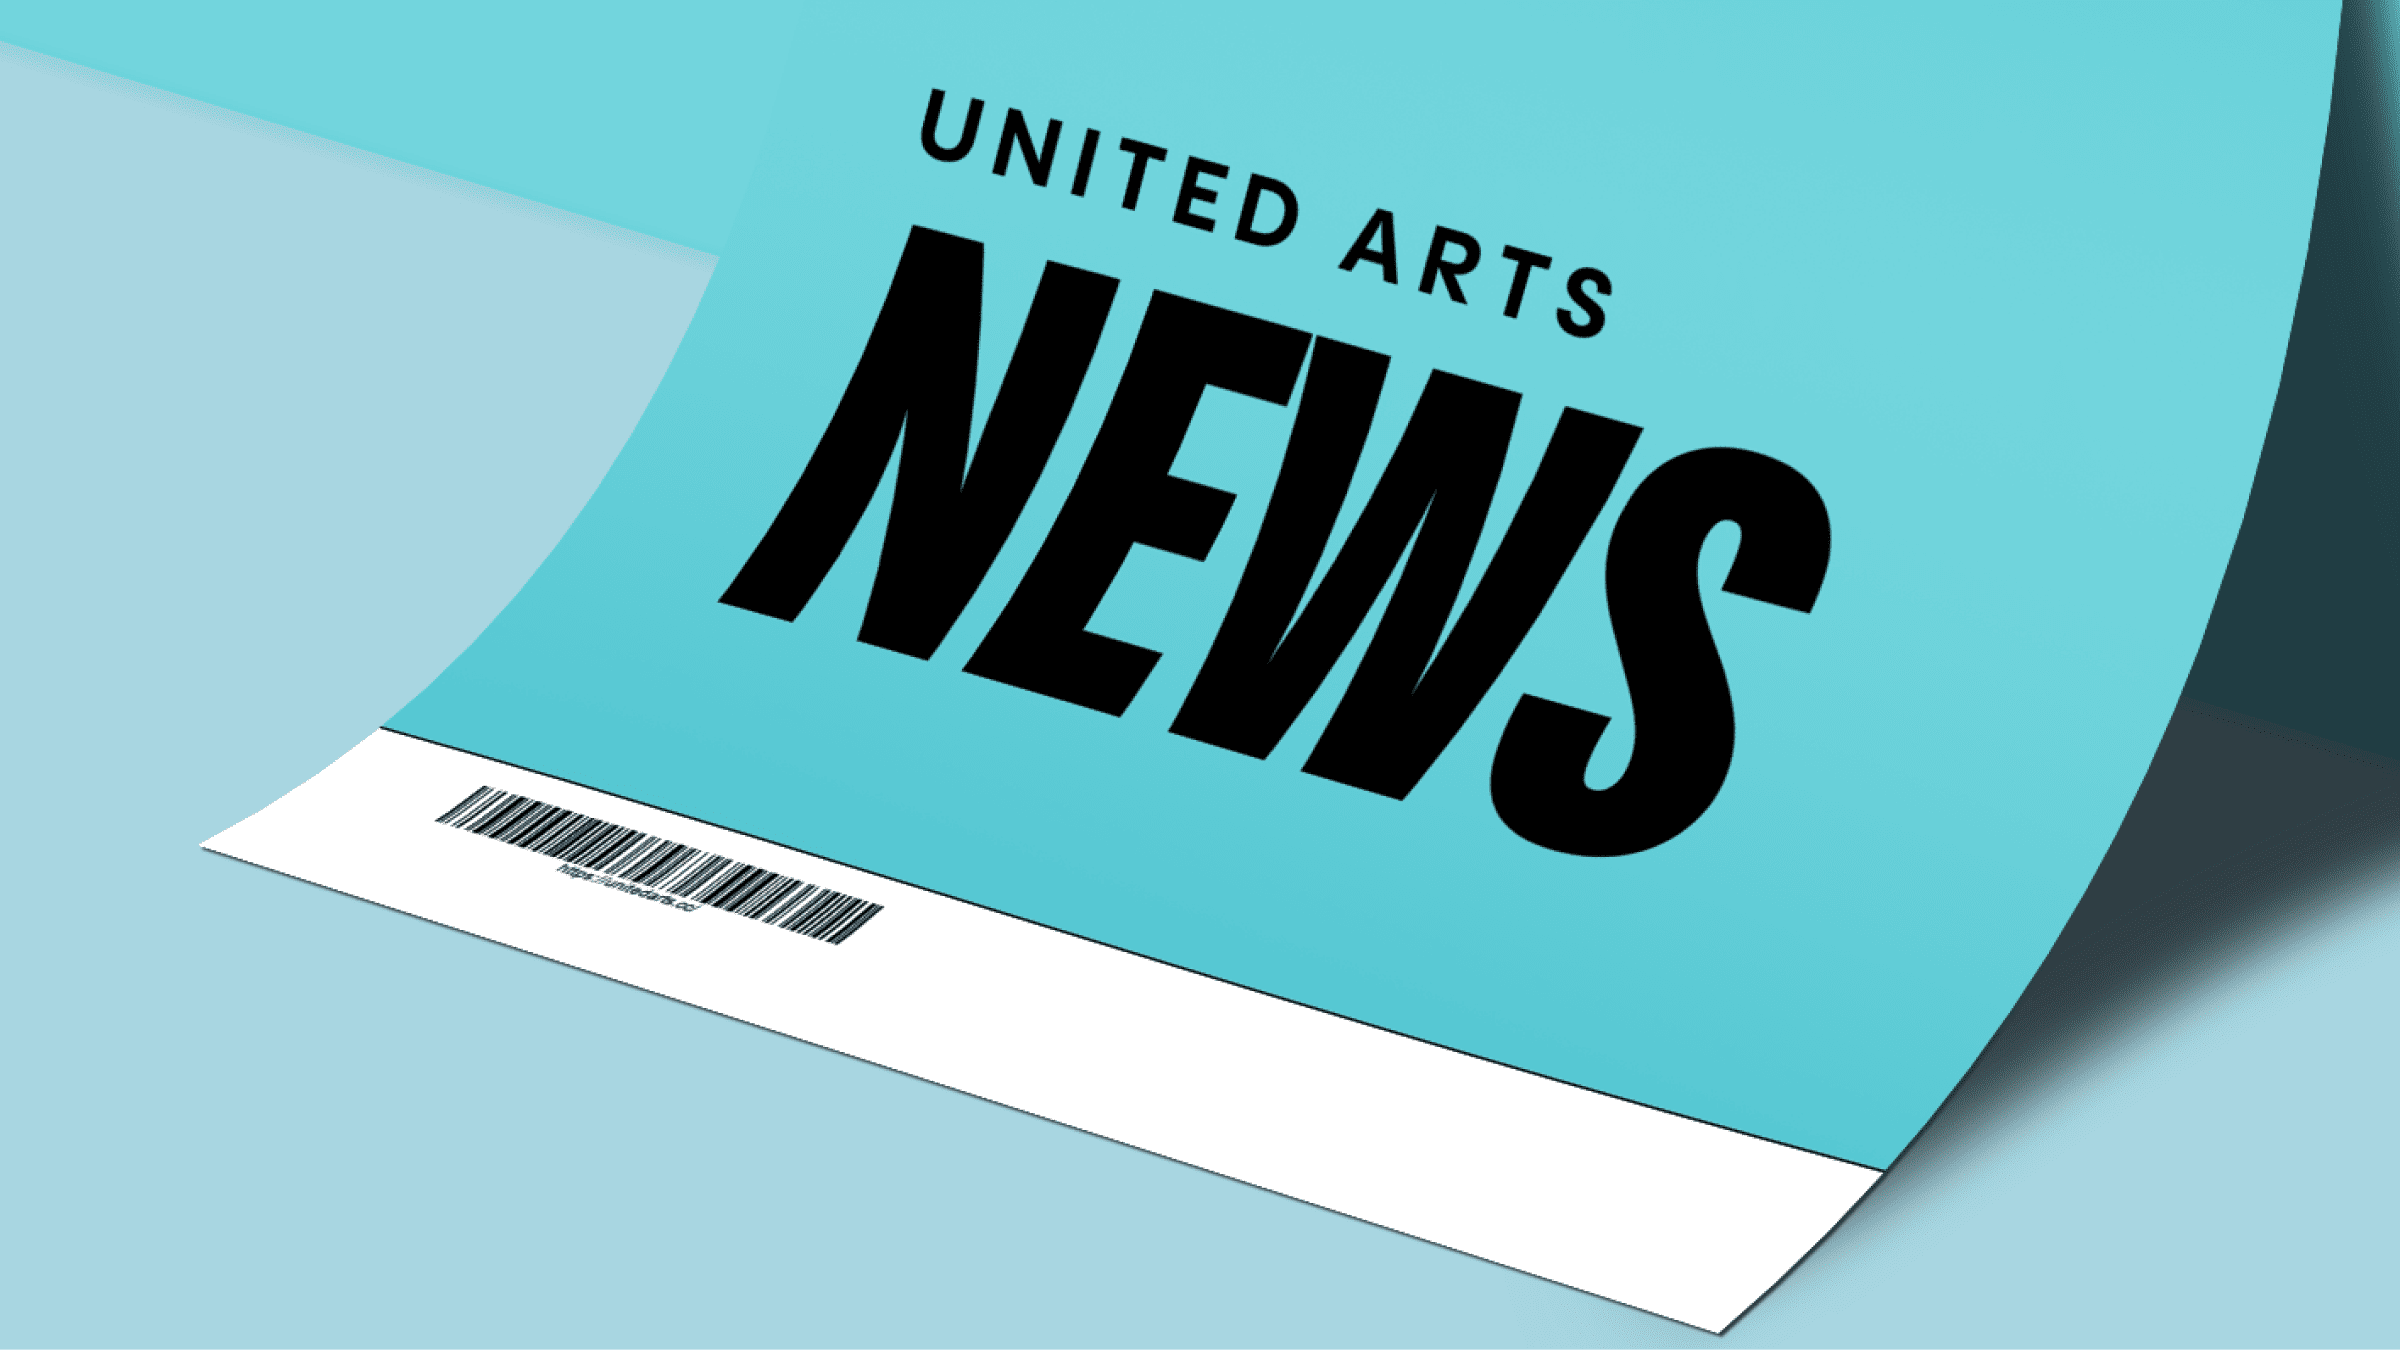 untied arts news